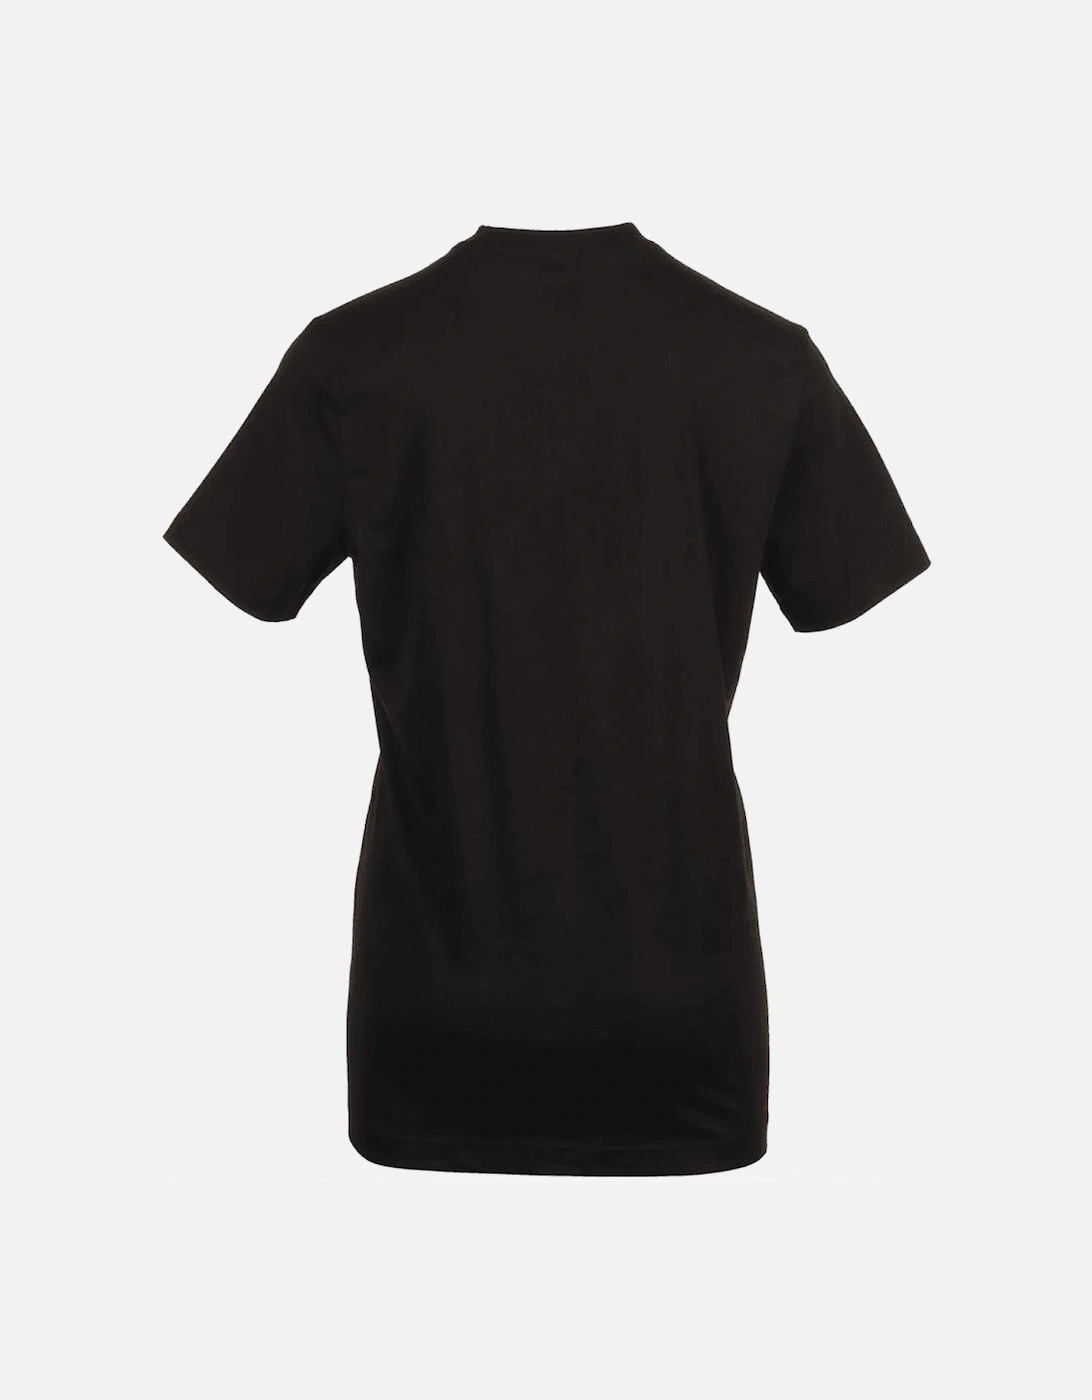 Tee Raised Logo Black T-Shirt